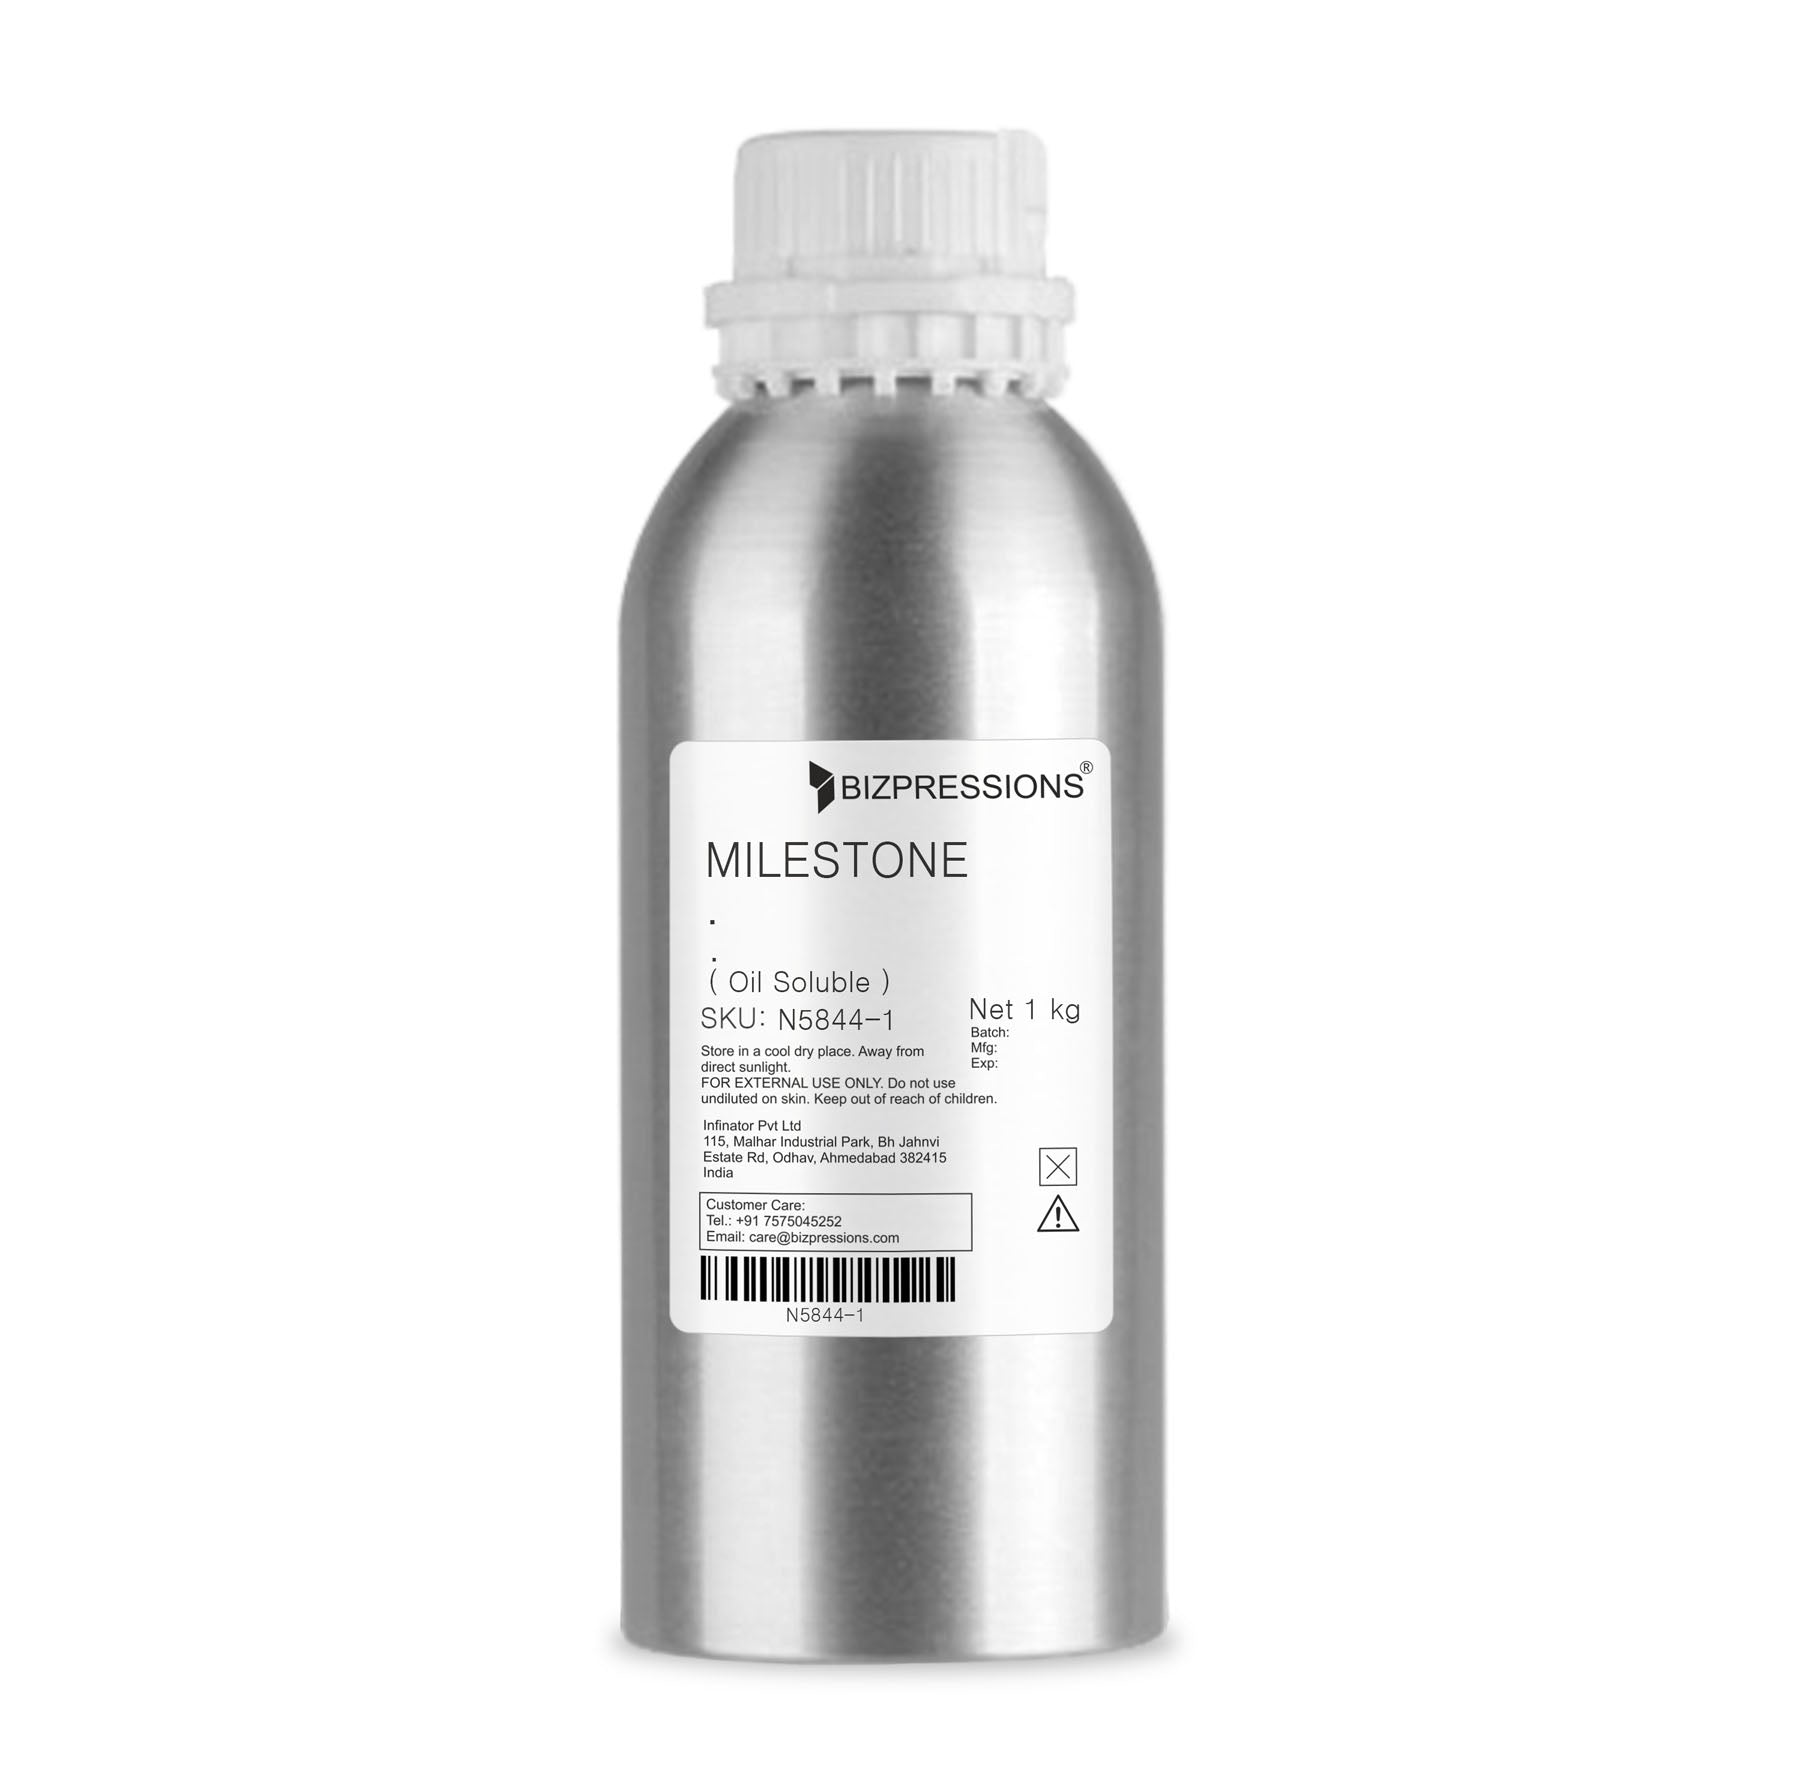 MILESTONE - Fragrance ( Oil Soluble ) - 1 kg